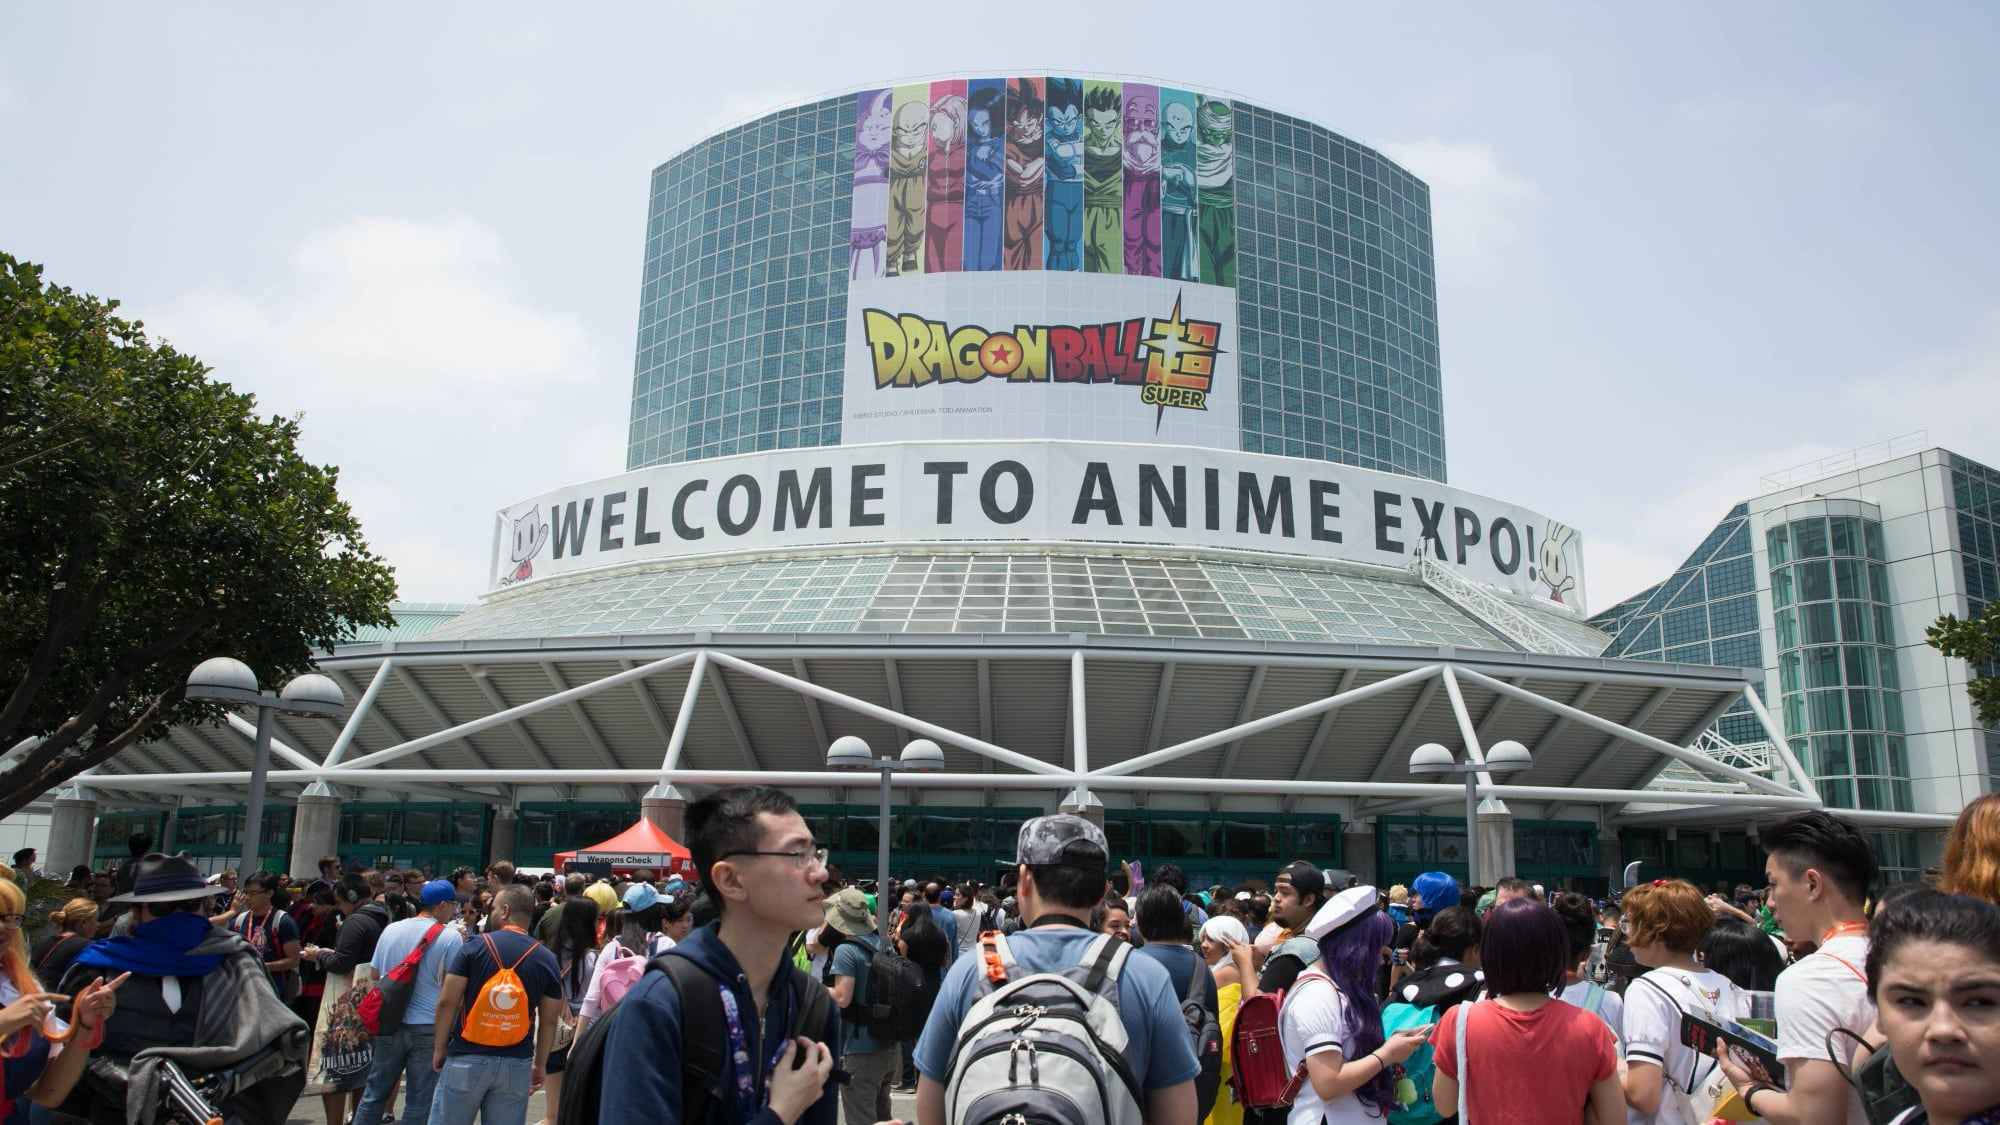 anime expo 2022 covid rules